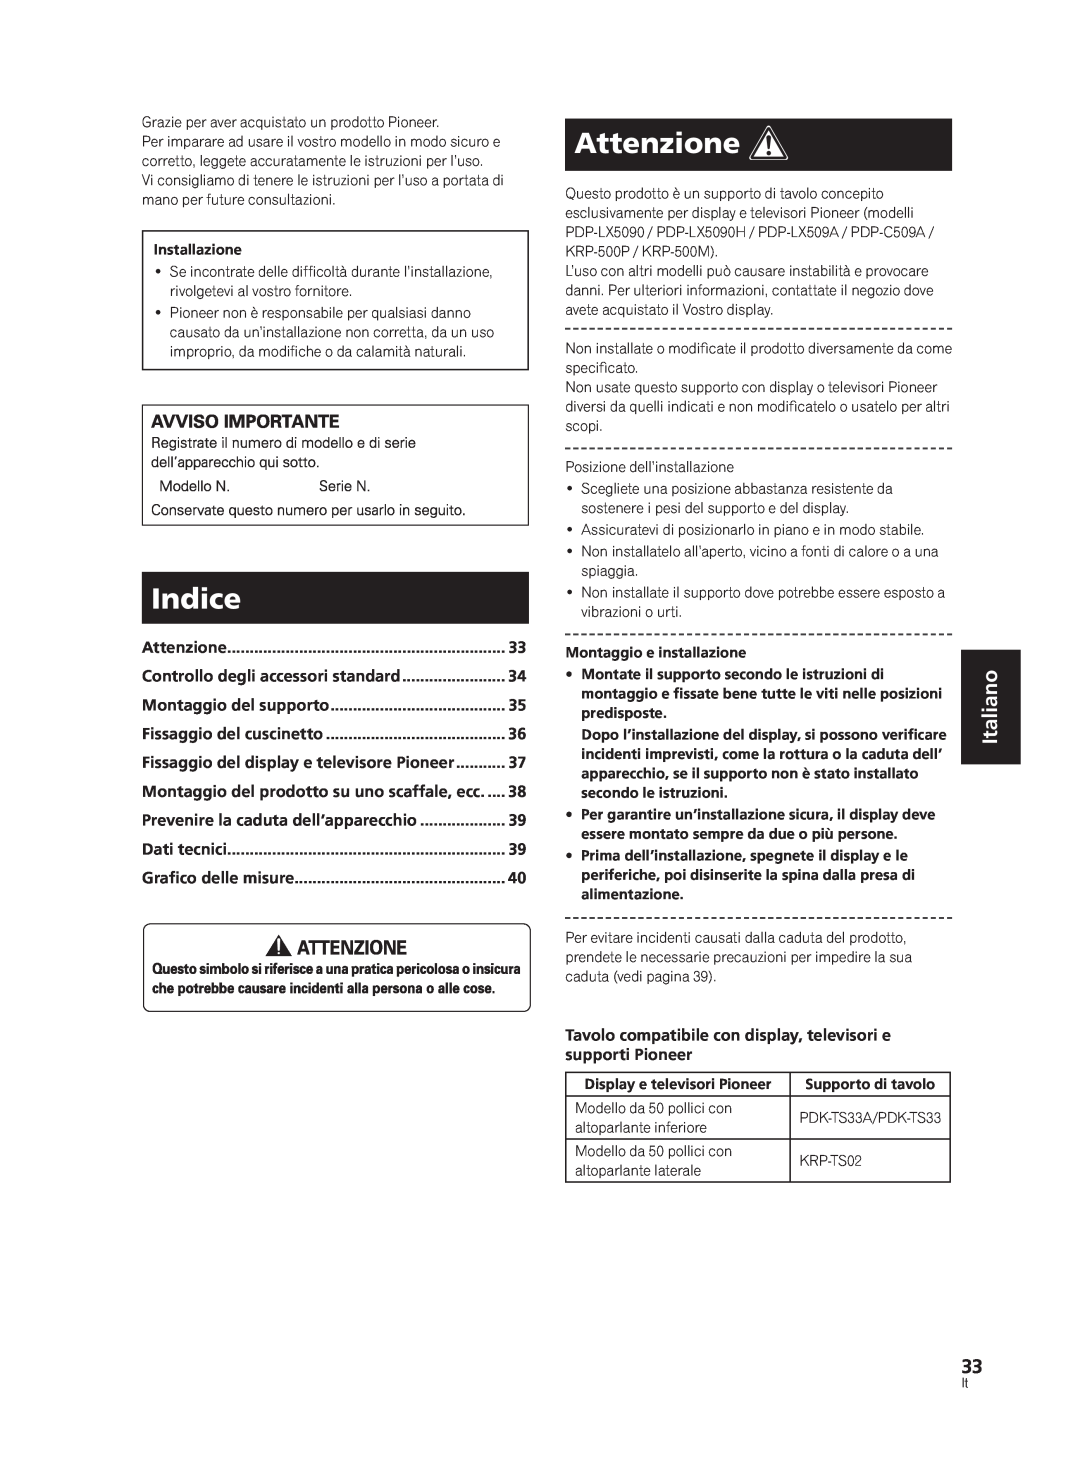 Pioneer PDK-TS33A, KRP-TS02 manual Indice, Attenzione, Italiano 